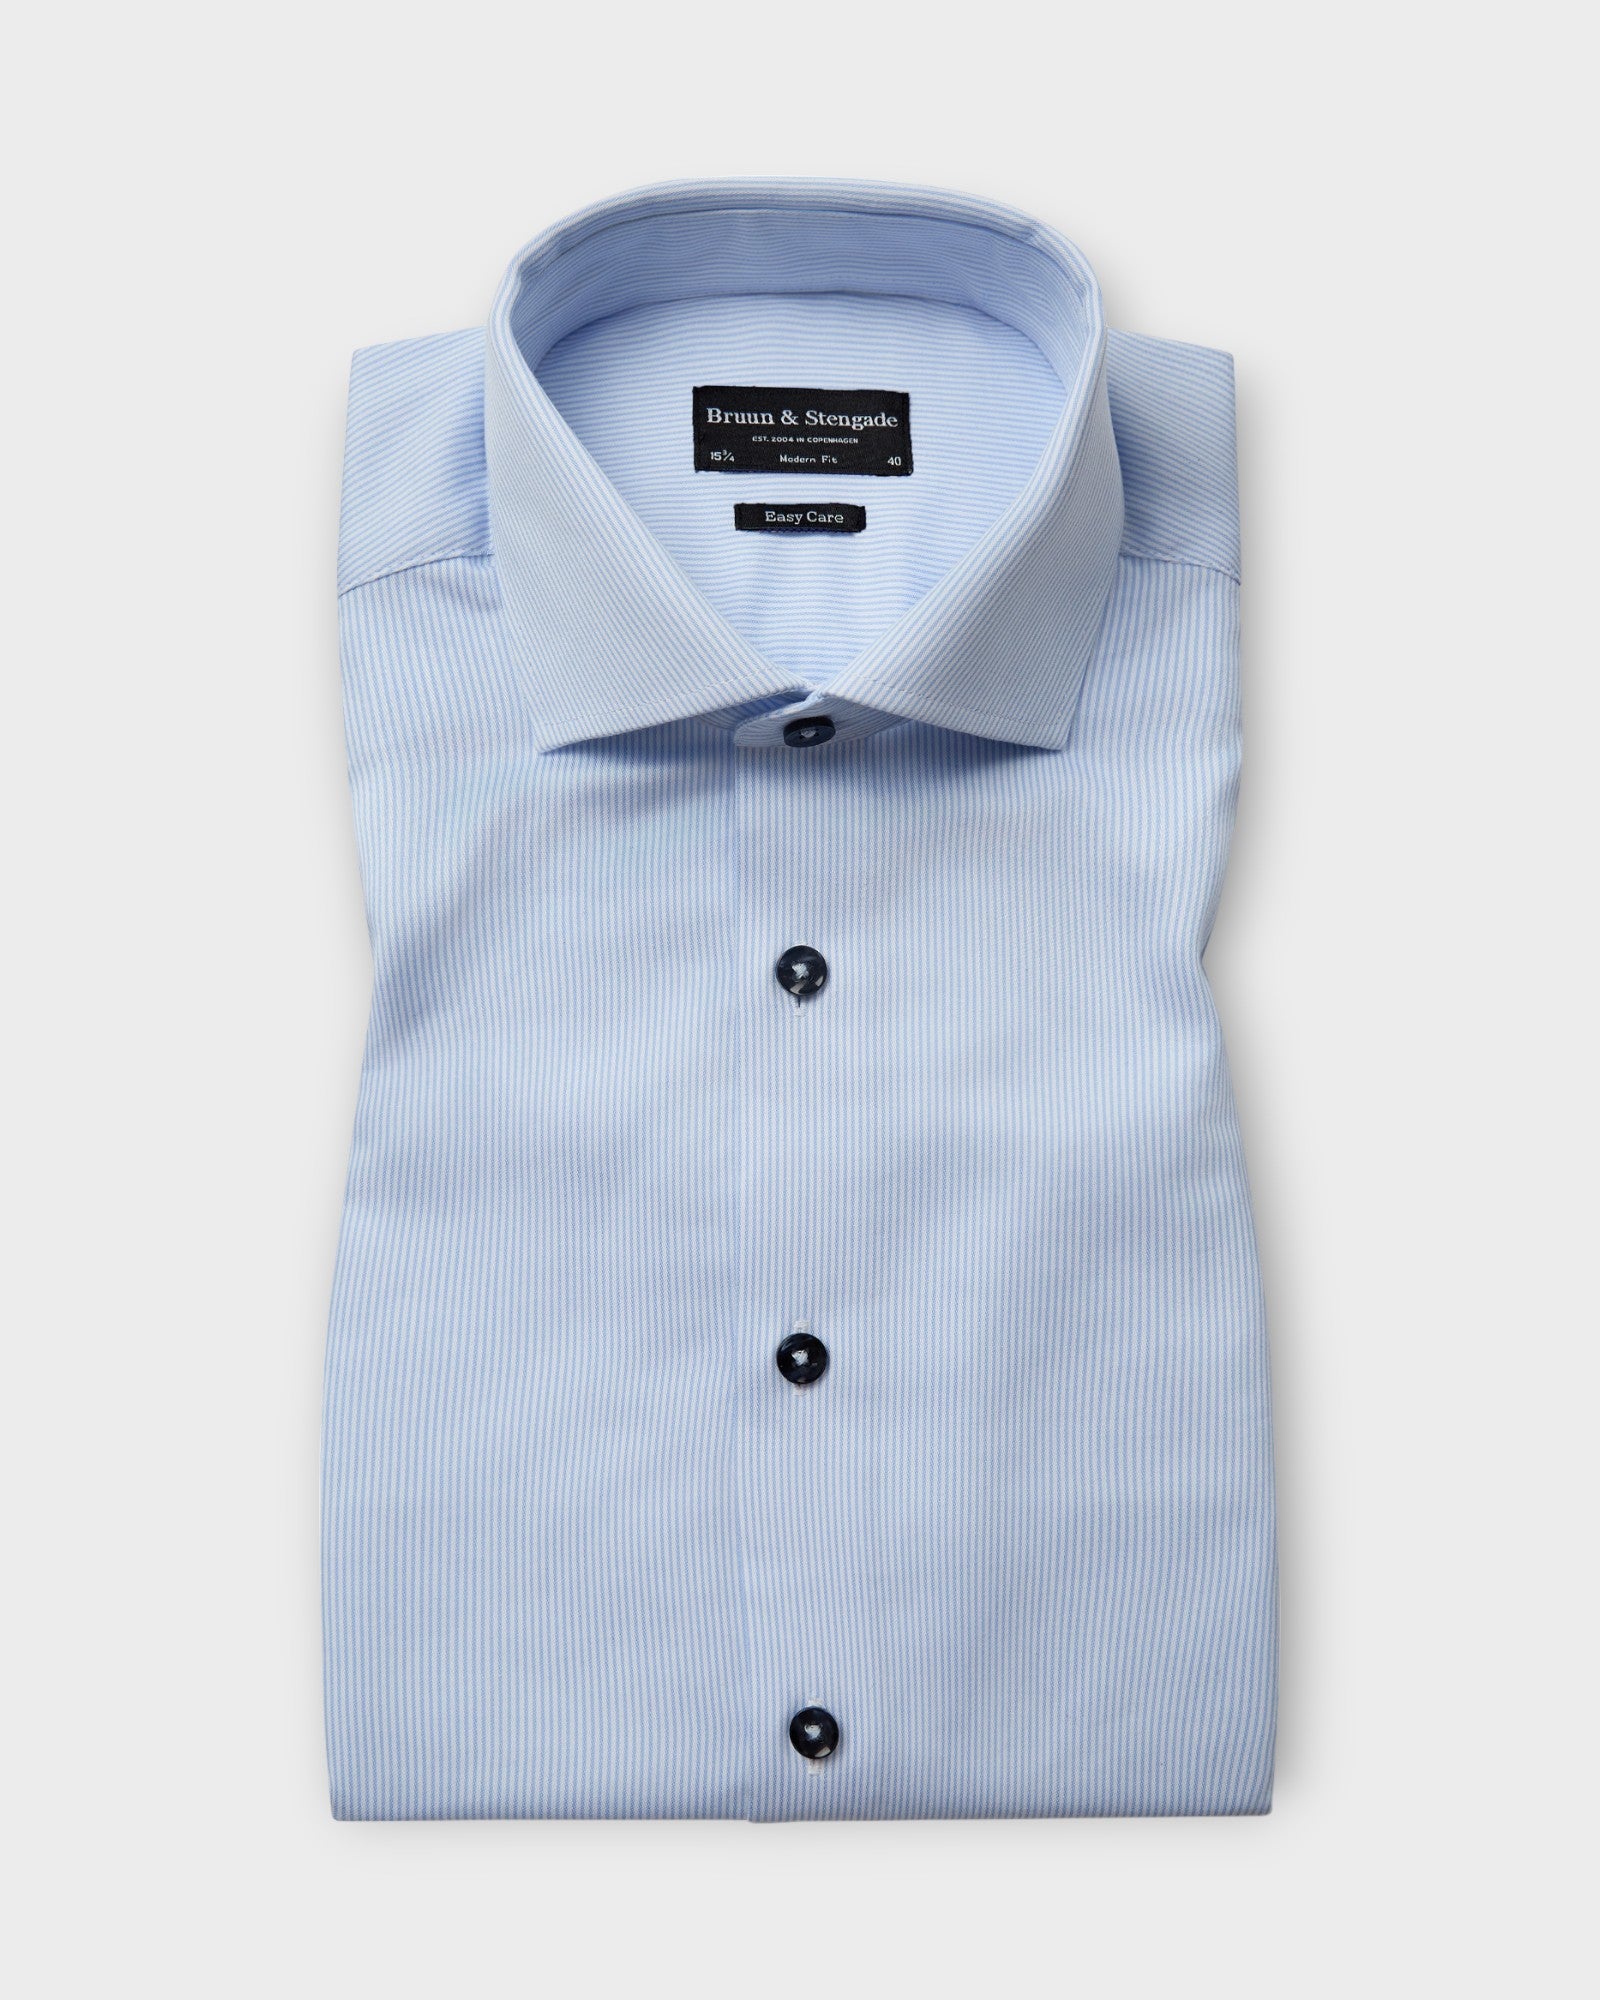 Seau Modern Fit Shirt Light Blue/White fra Bruun og Stengade. Blå og hvid stribet langærmet herre skjorte. Her set forfra.